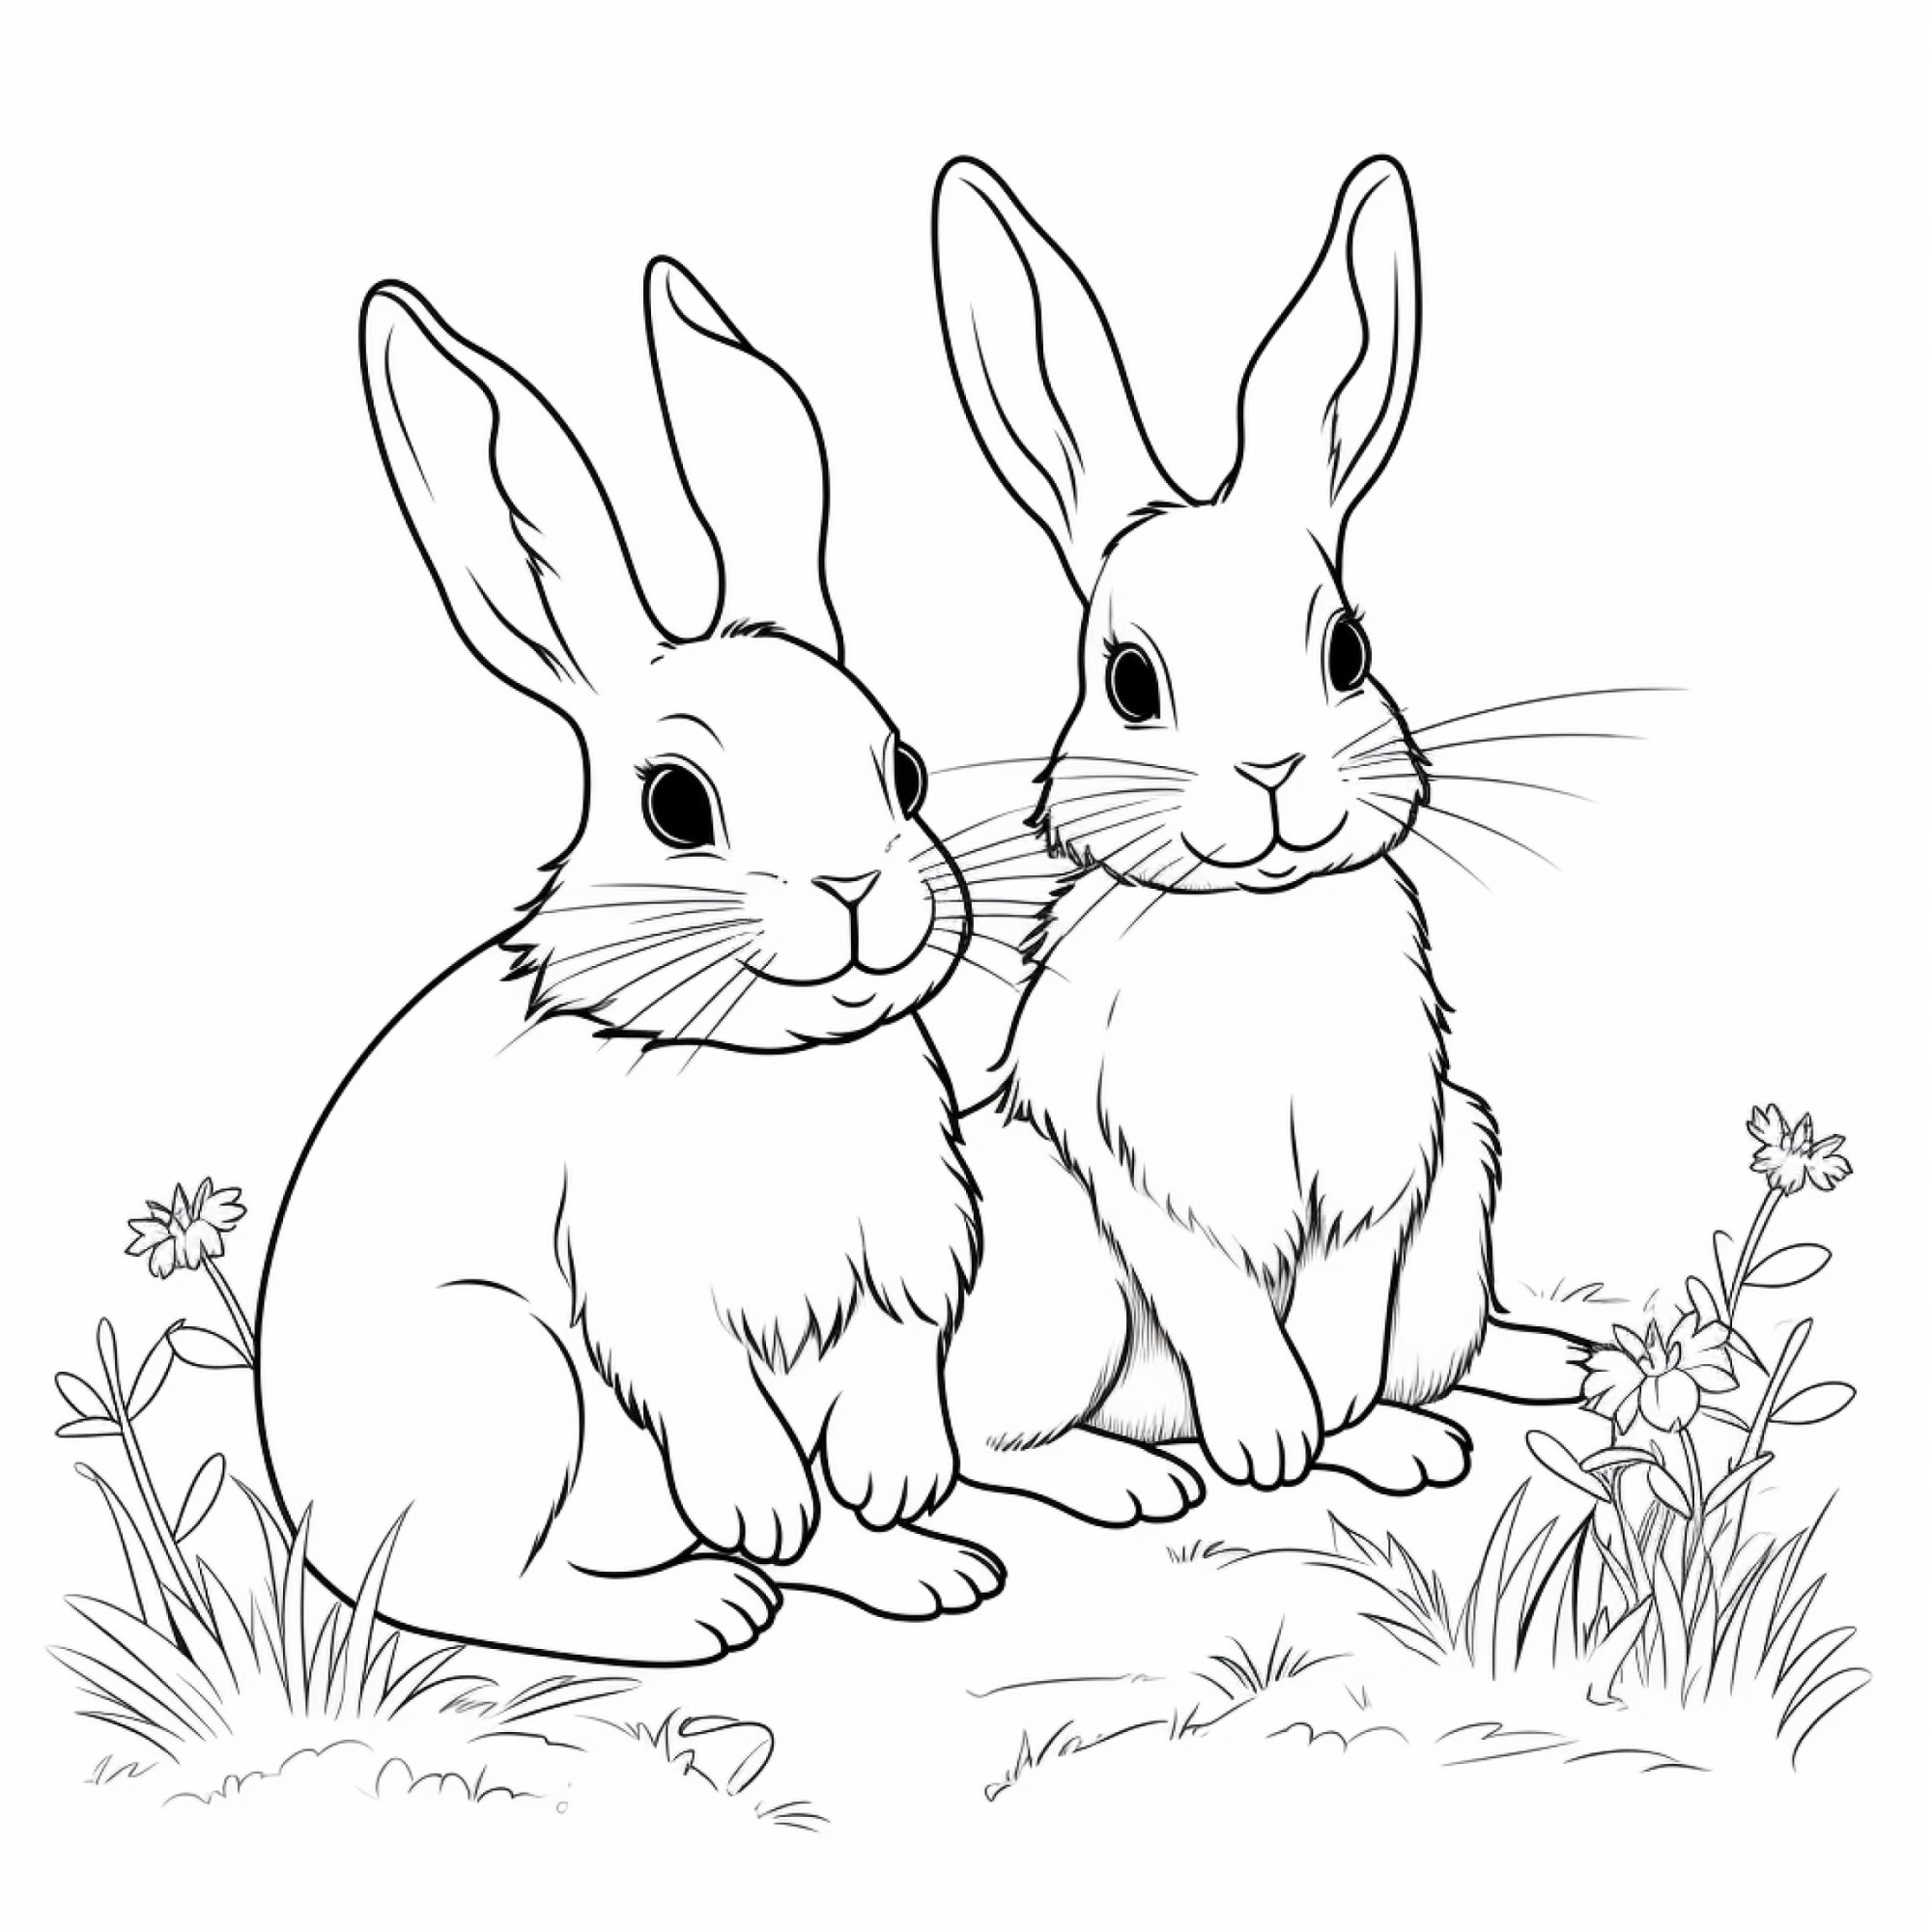 Раскраска для детей: зайцы сидят на полянке